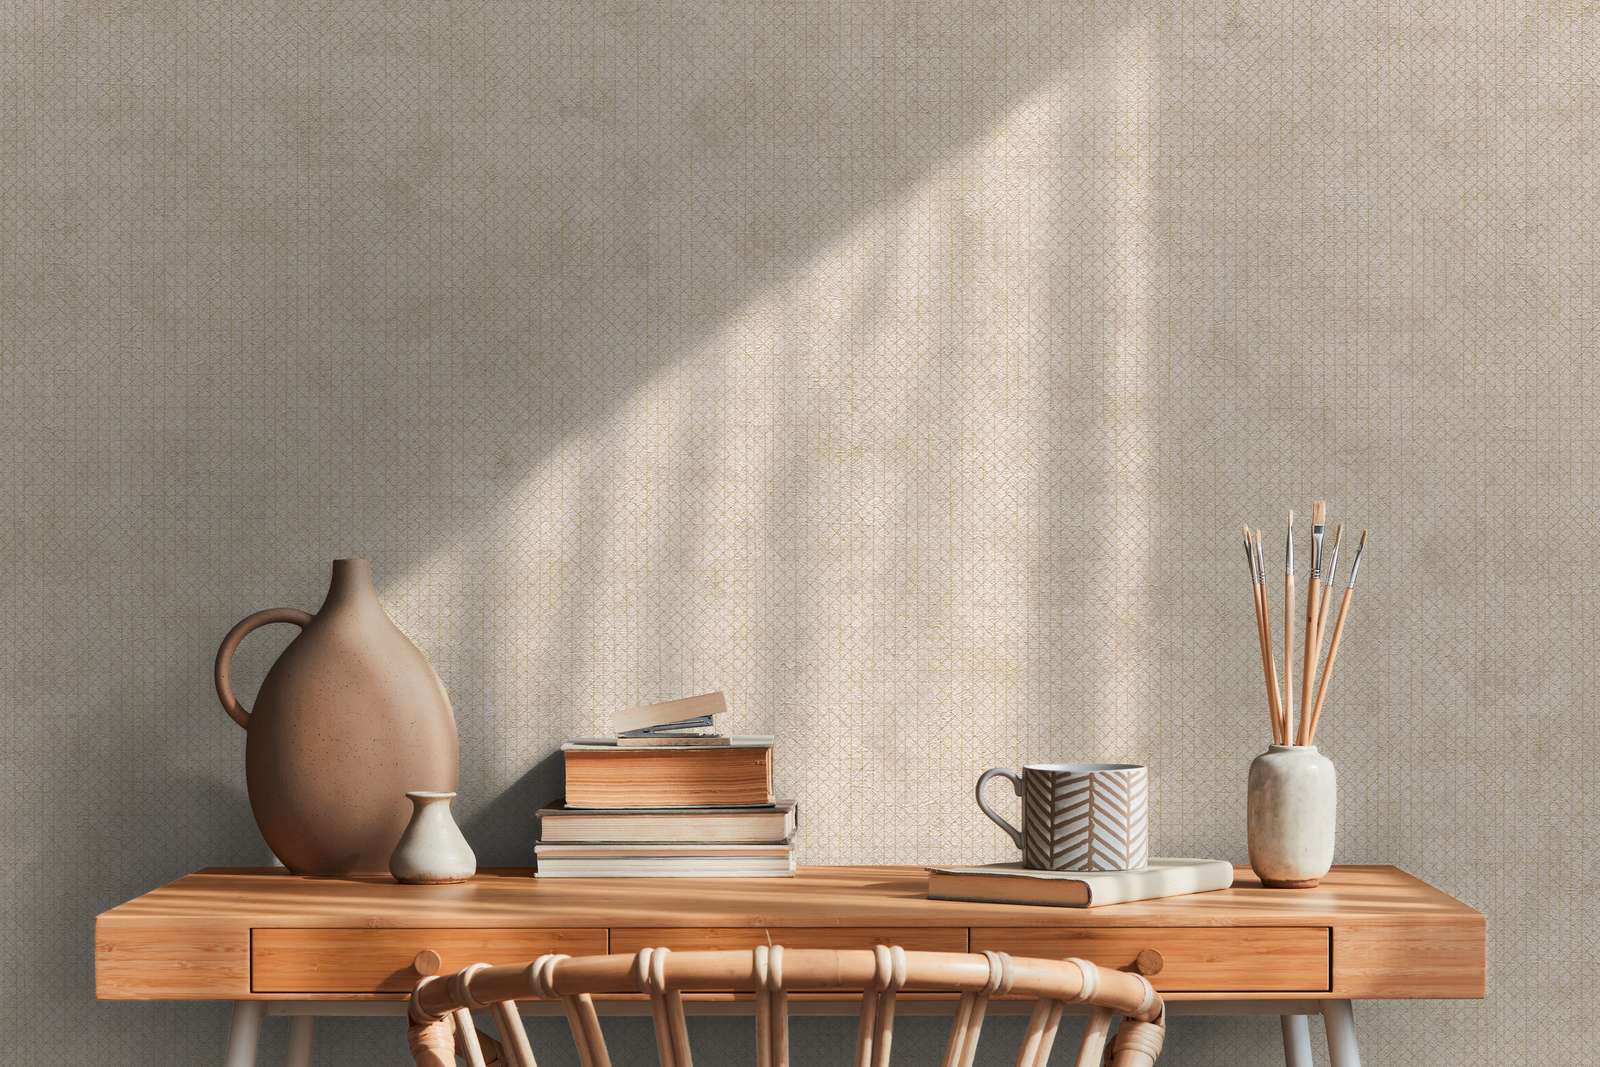             Wallpaper cream-beige with metallic texture pattern
        